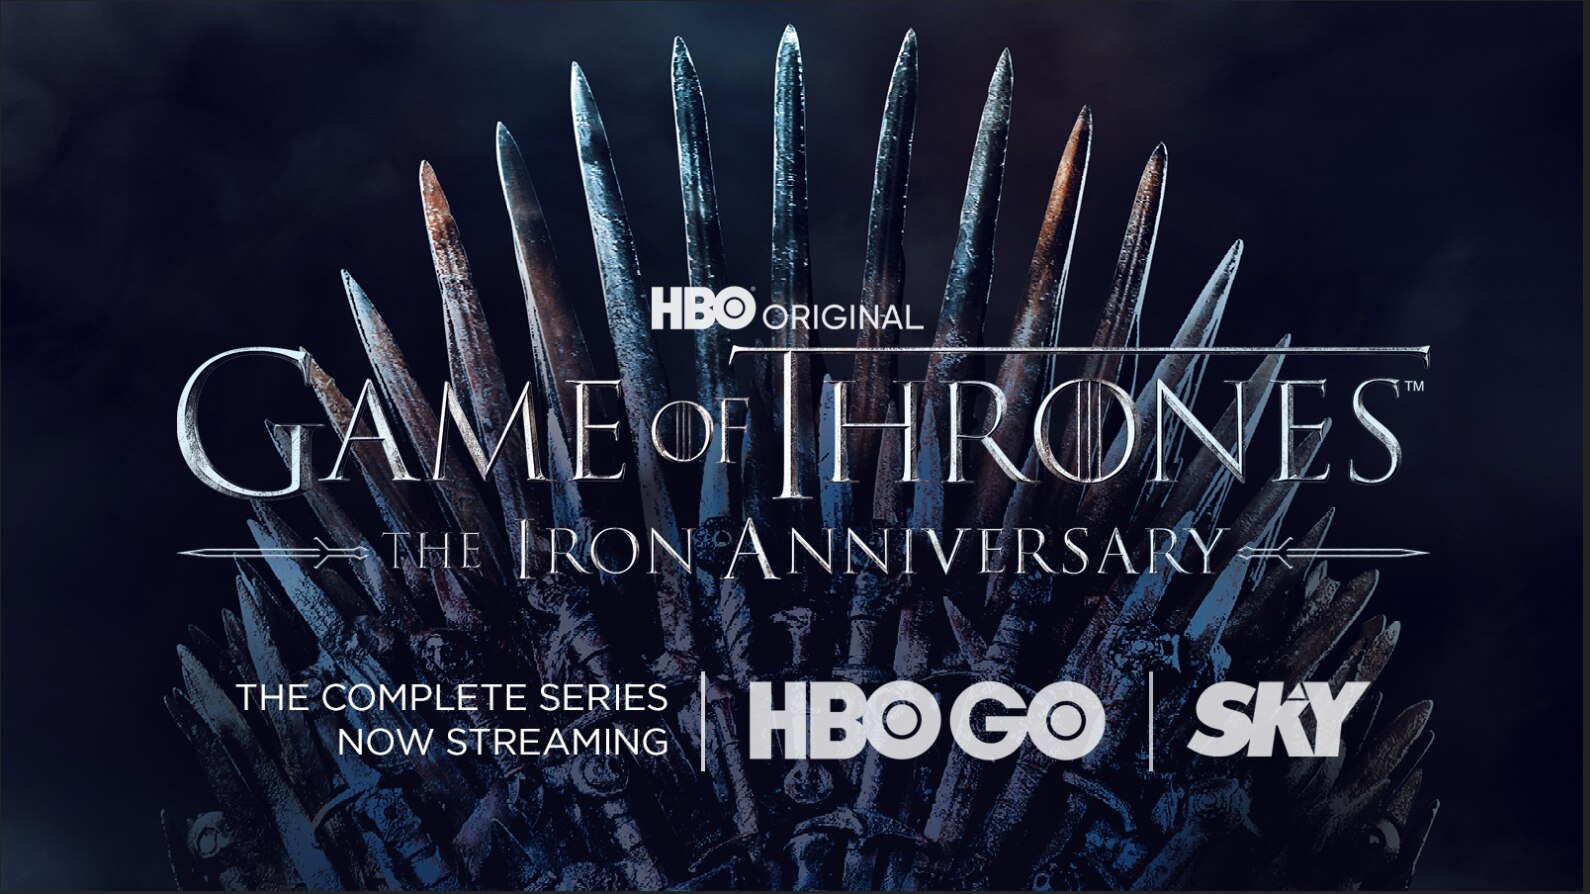 Binge Watch "Game of Thrones" before prequel in 2022